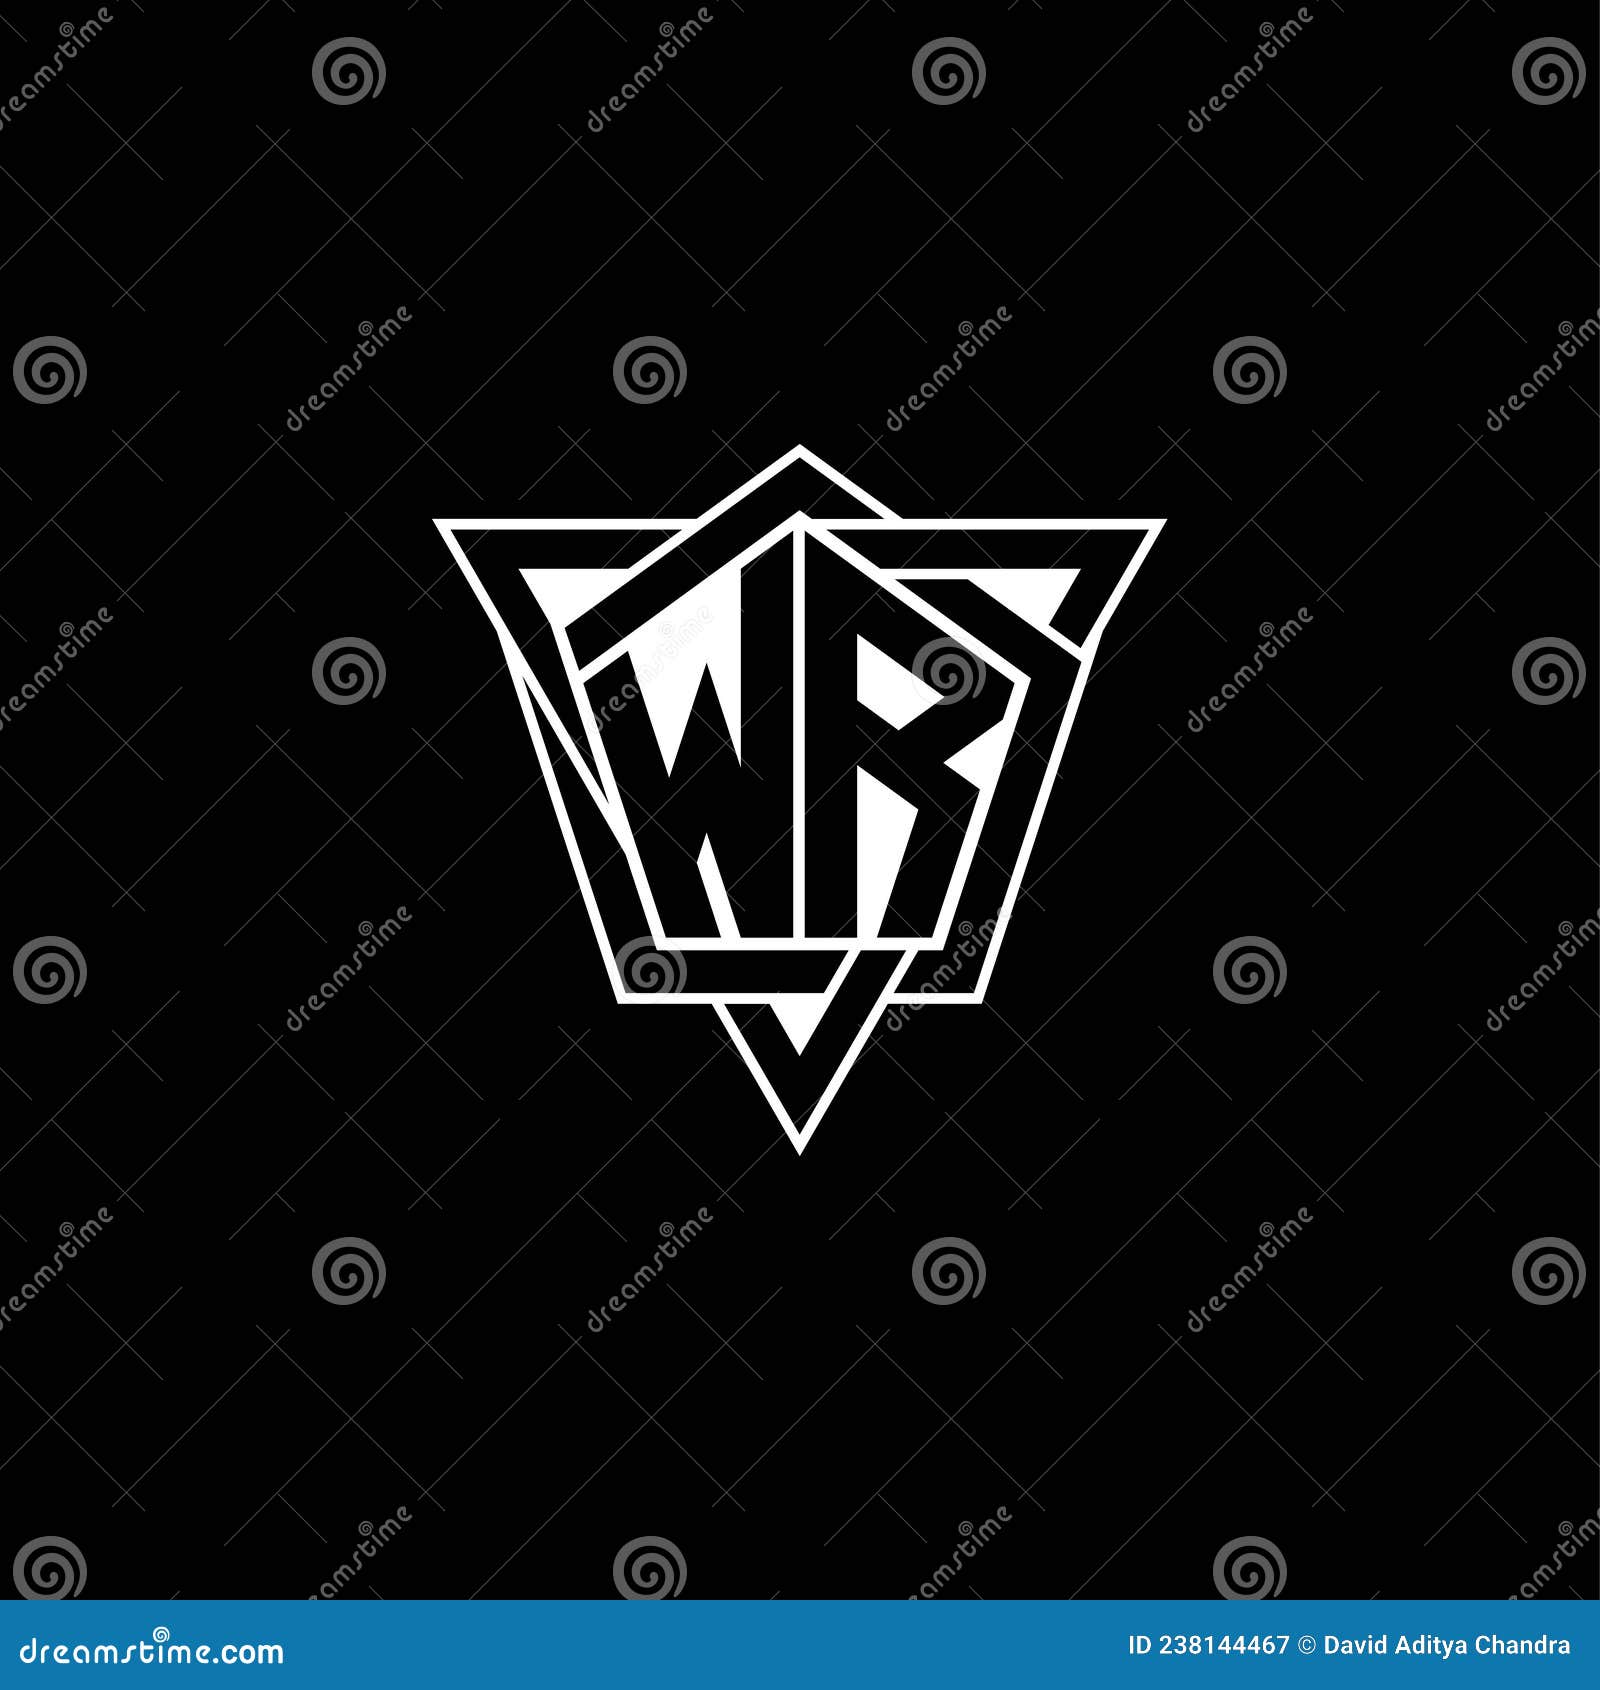 Ww logo monogram rounded hexagon shape Royalty Free Vector